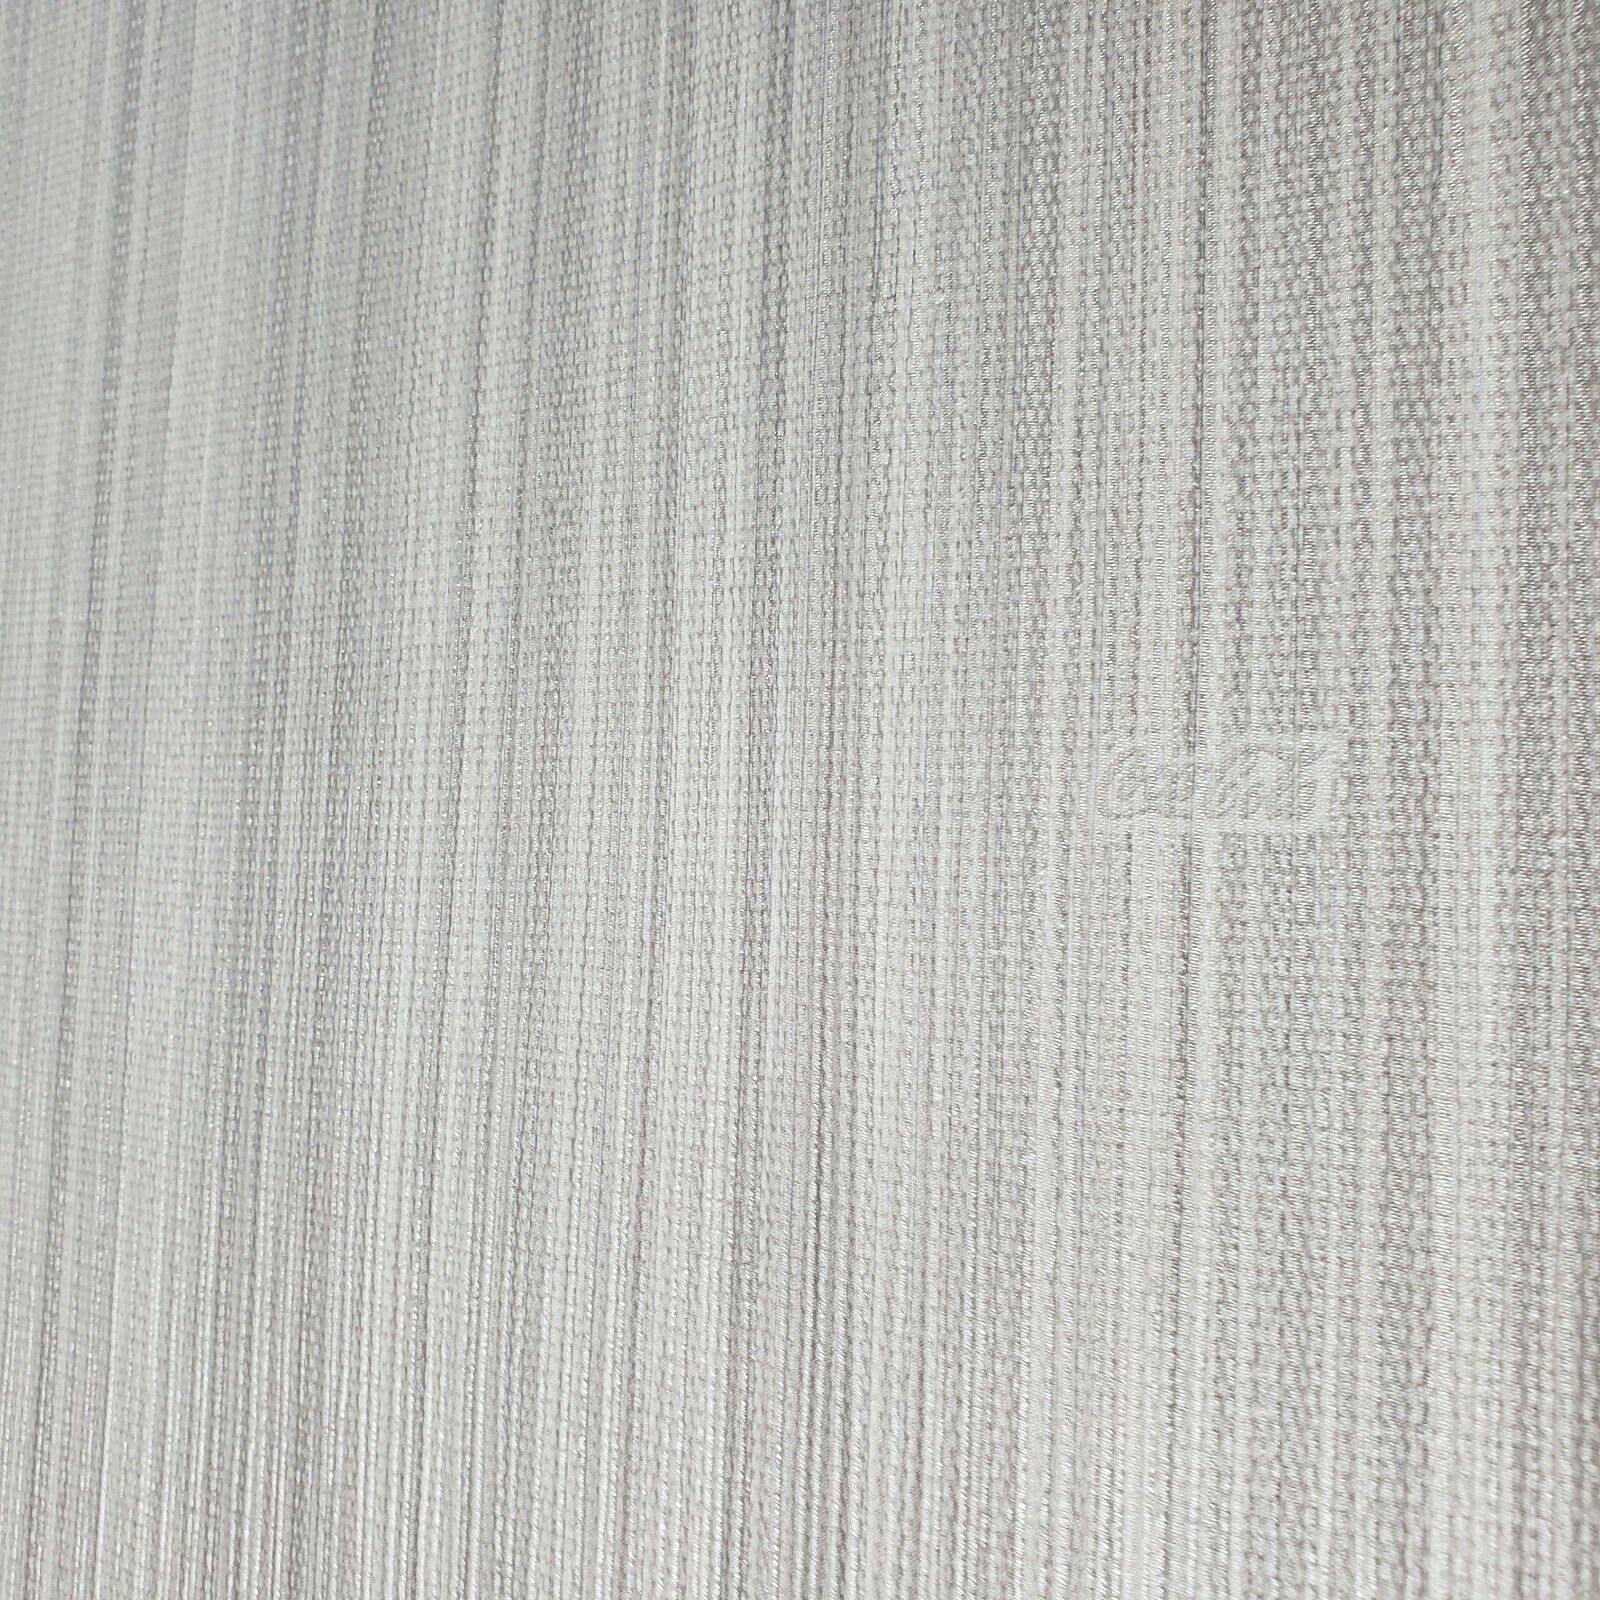 Z41205 Zambaiti gray off white silver metallic vertical stria 